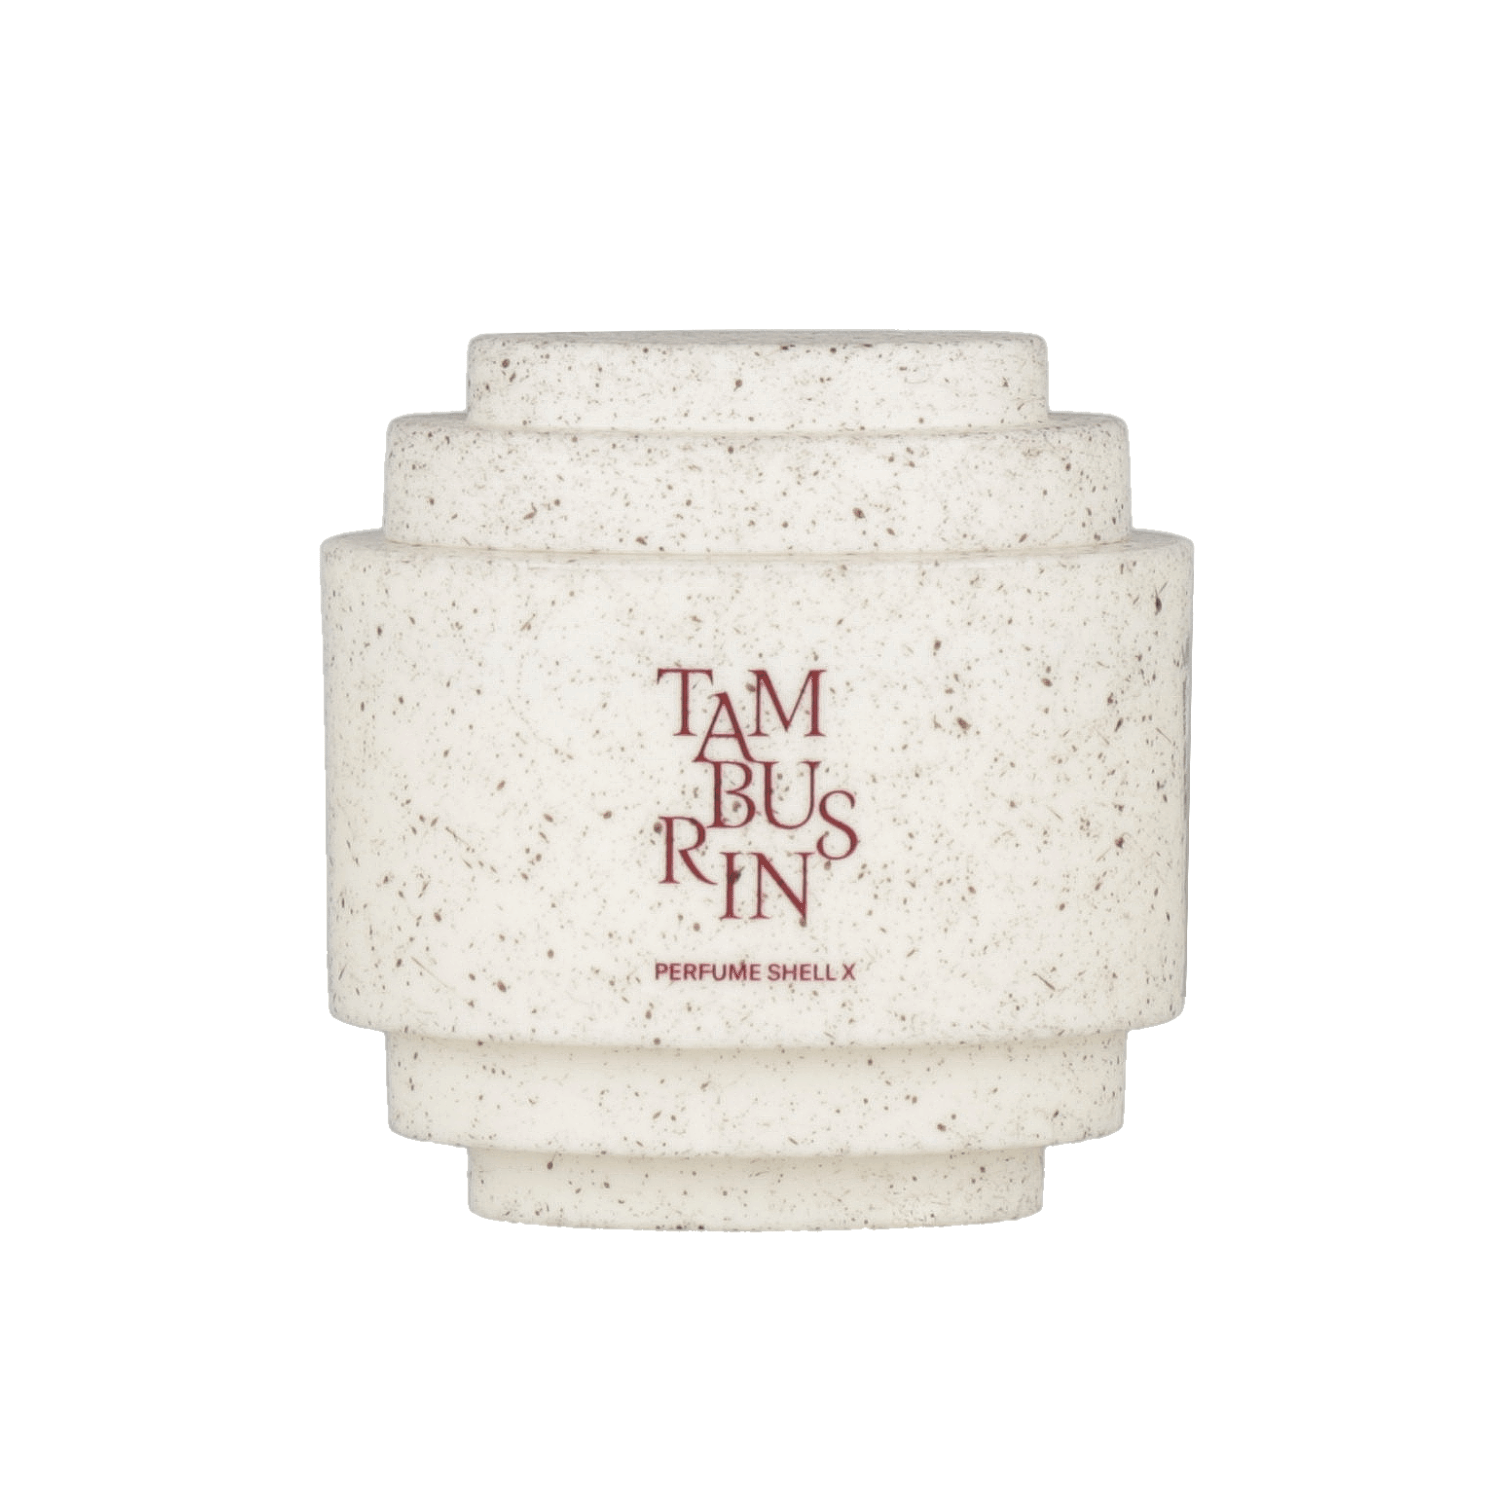 Berga sandal body scrub with Tamburins perfume shell hand cream, 30ml.